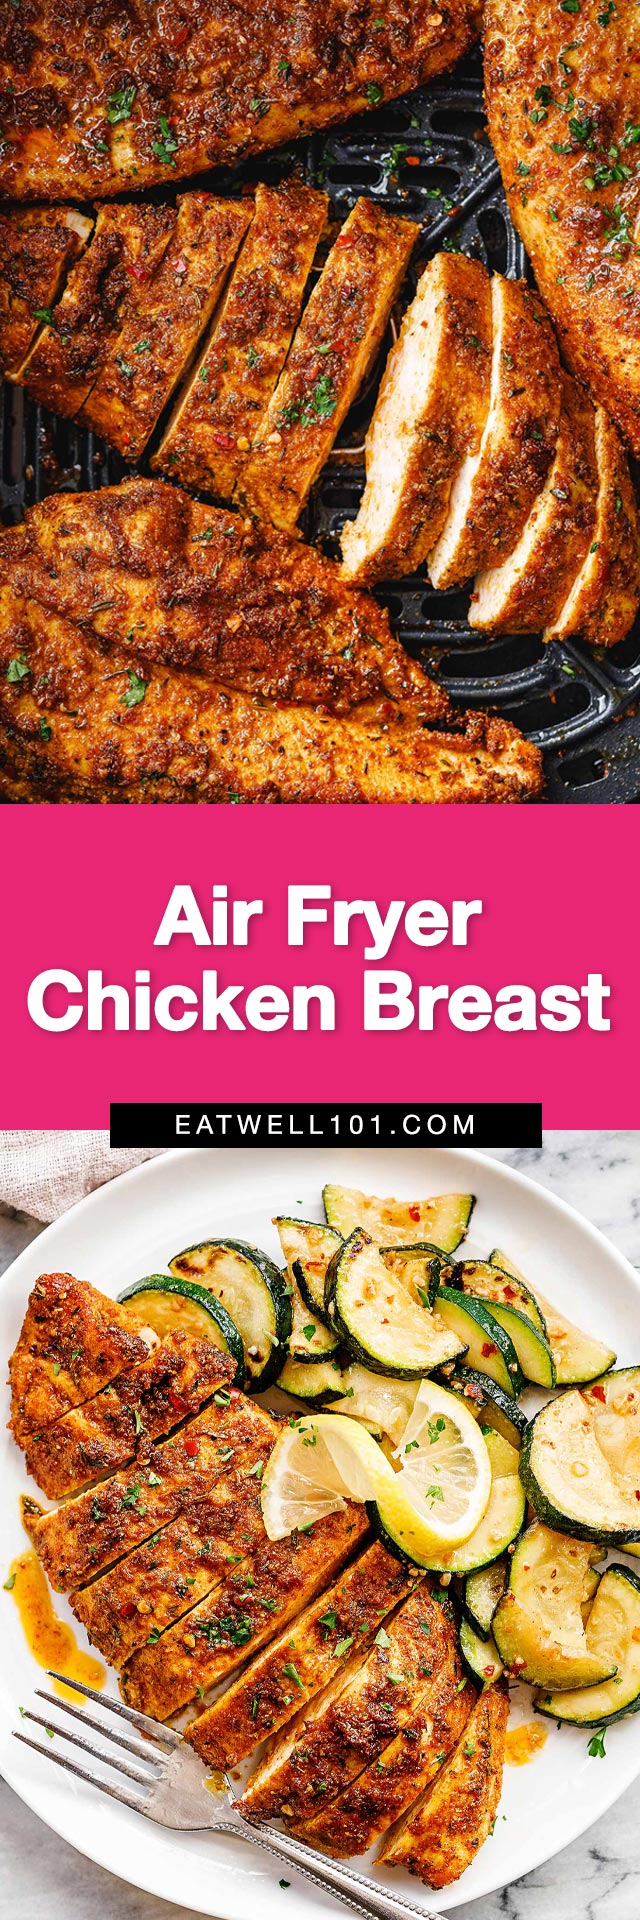 https://www.eatwell101.com/wp-content/uploads/2022/01/air-fryer-chicken-breast-recipe.jpg